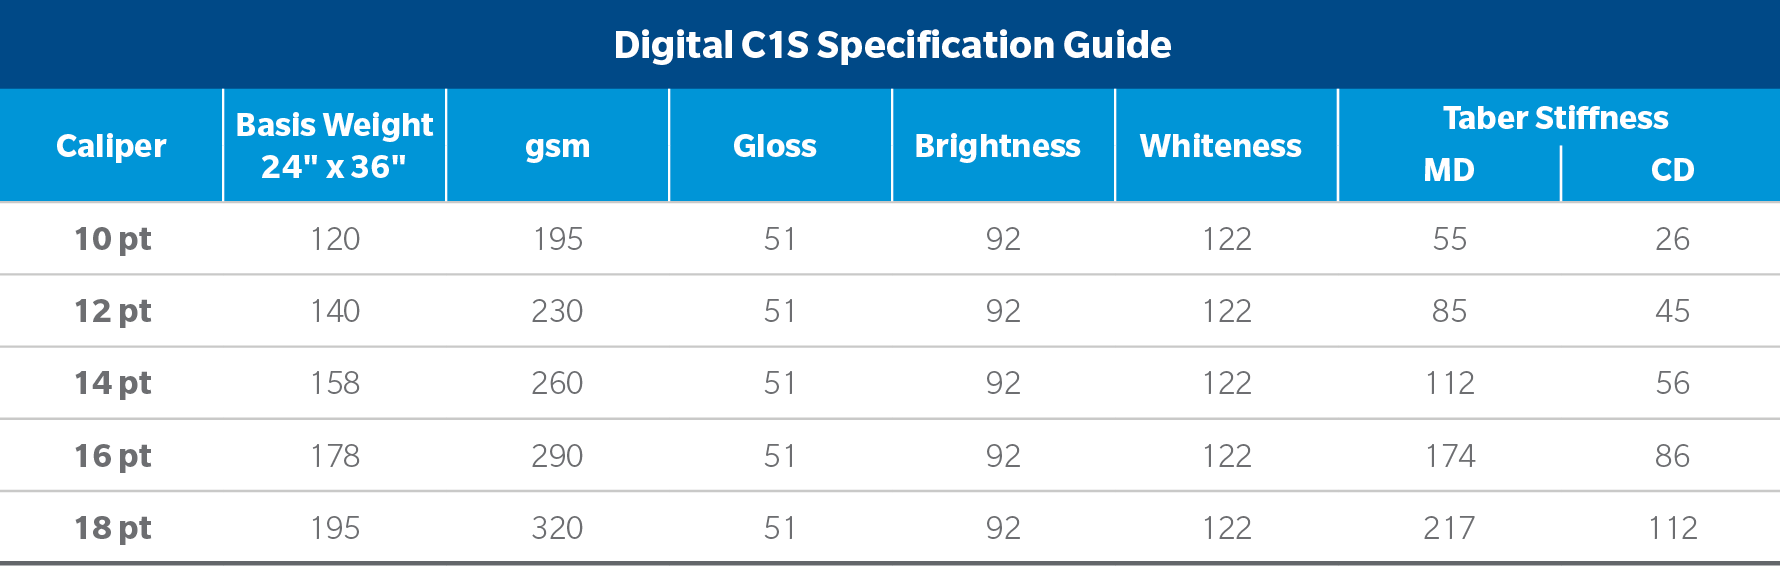 Tango Digital C1S Product Guide Spec Chart